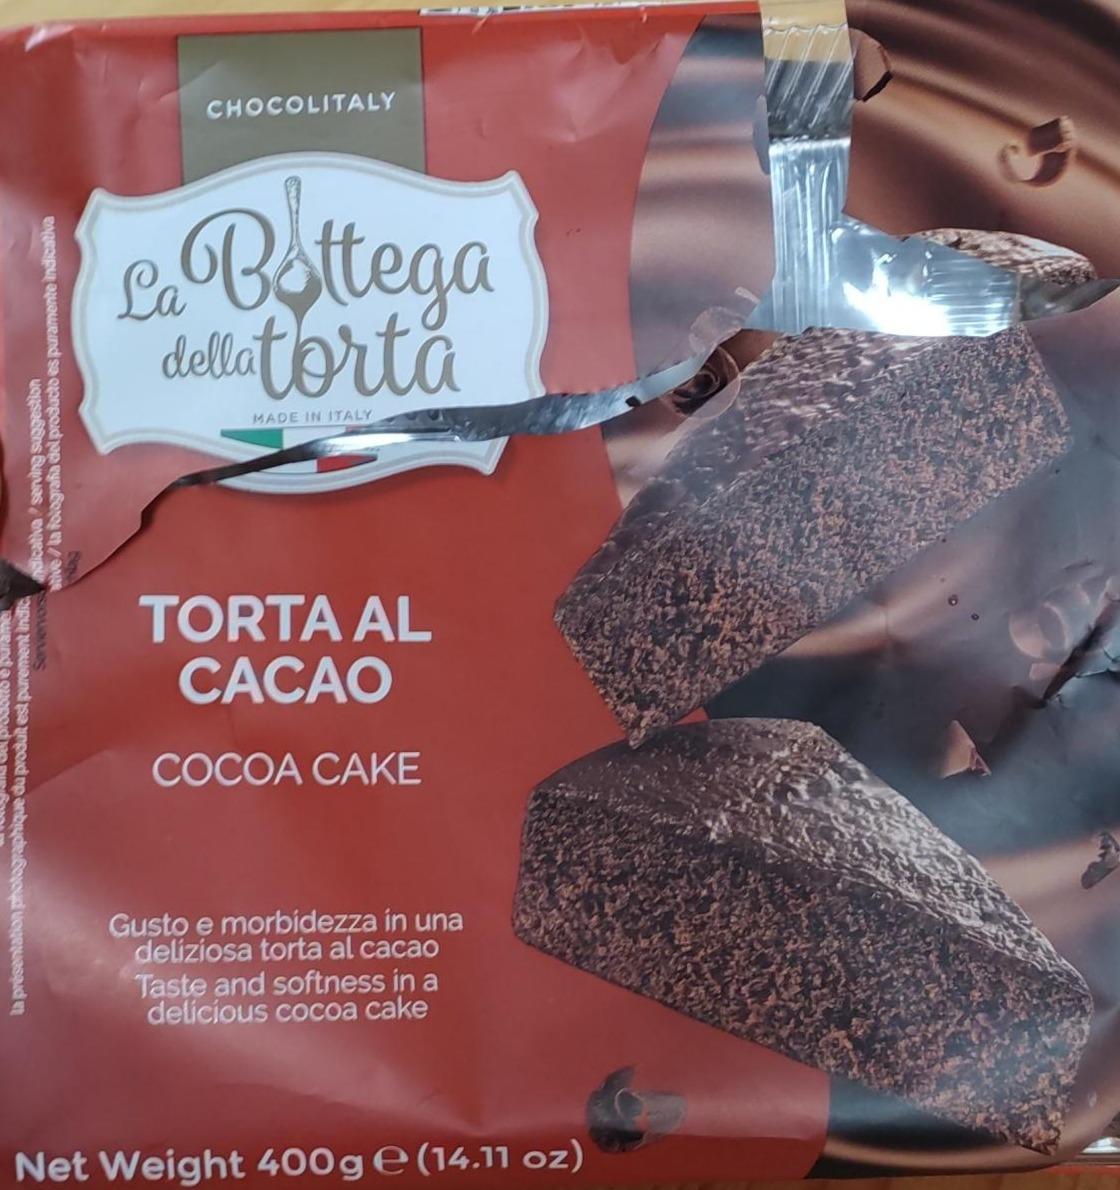 Fotografie - Torta al cacao la bottega Della torta Chocolitaly